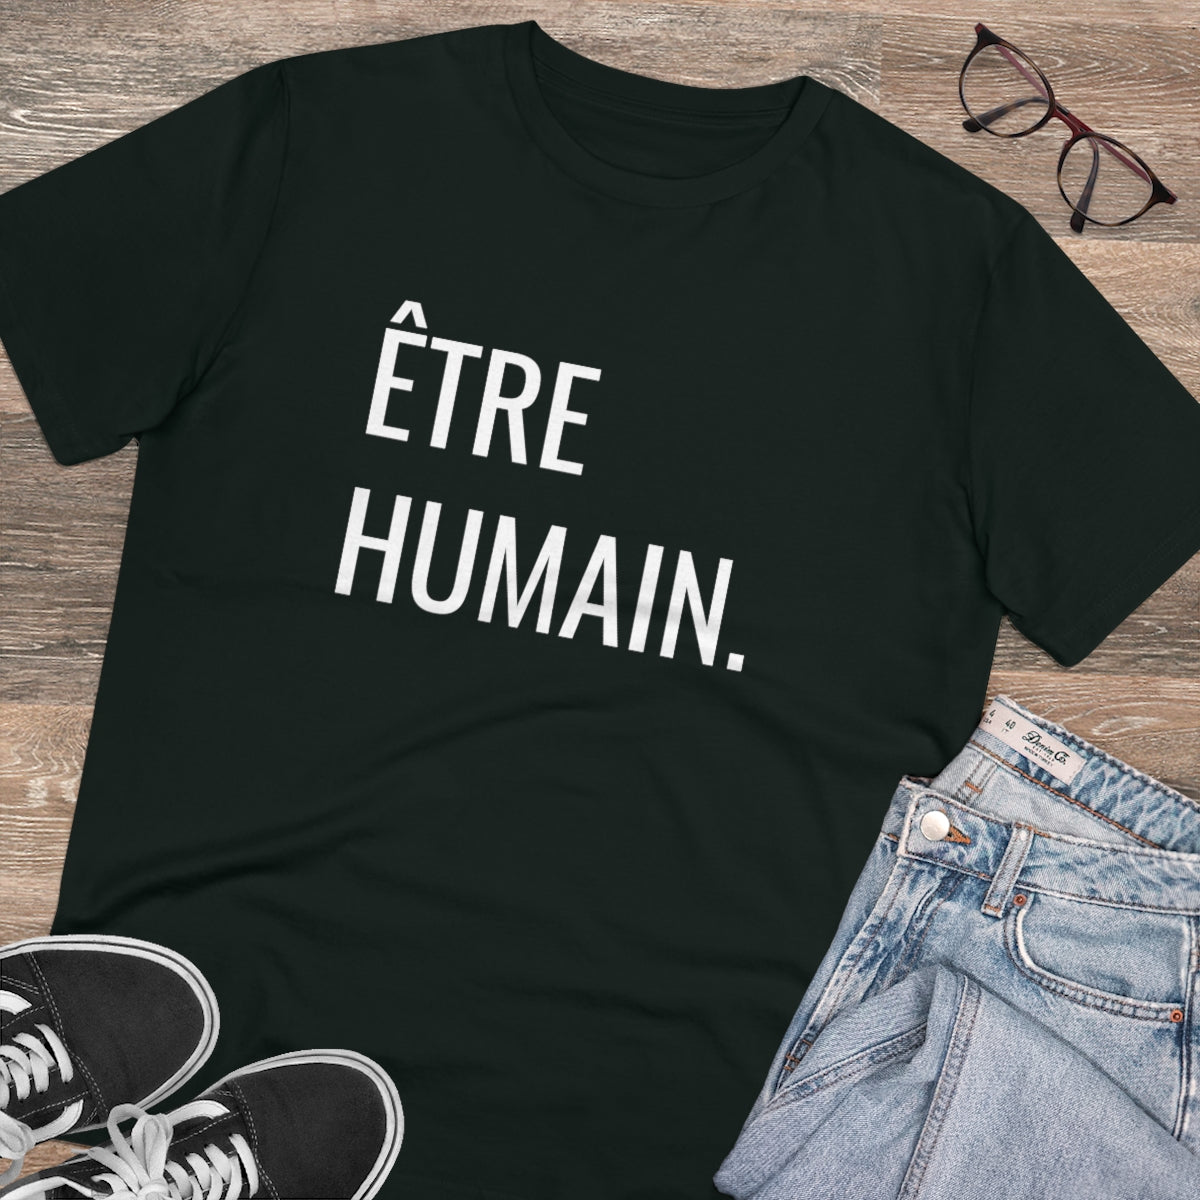 ÊTRE HUMAIN. - Organic Creator T-shirt - Unisex